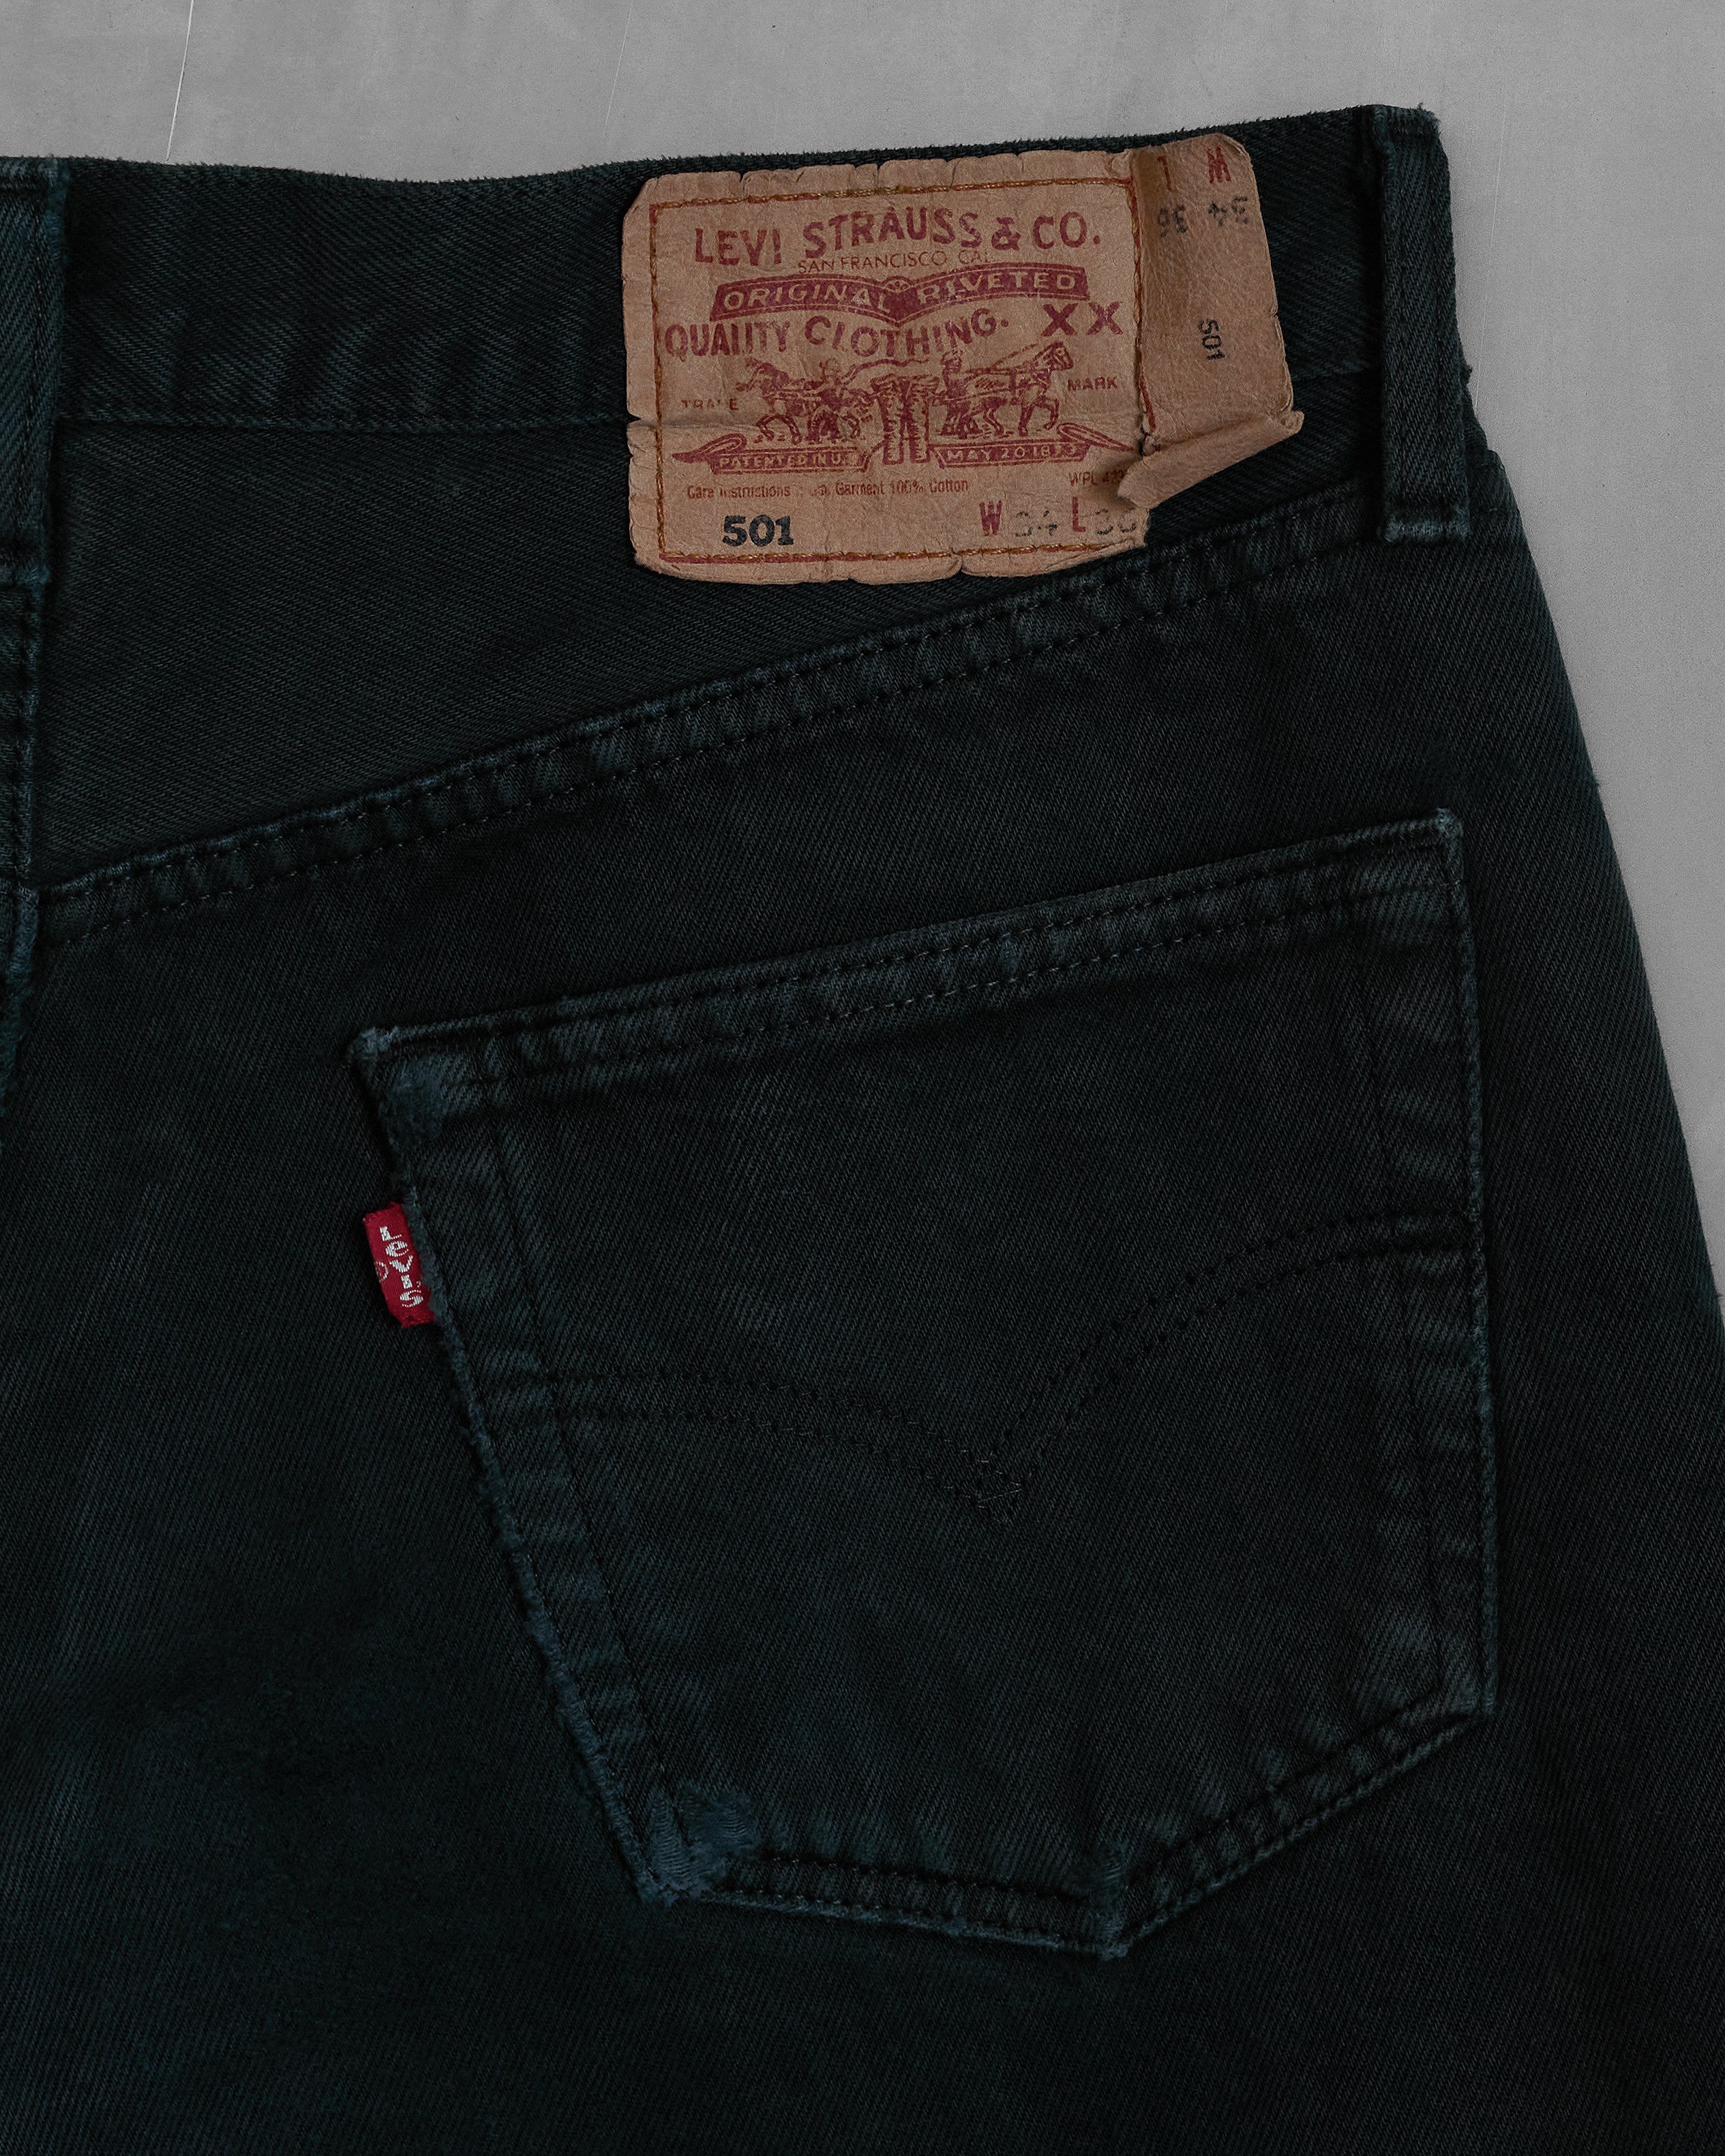 1890 501® Original Fit Selvedge Men's Jeans - Dark Wash